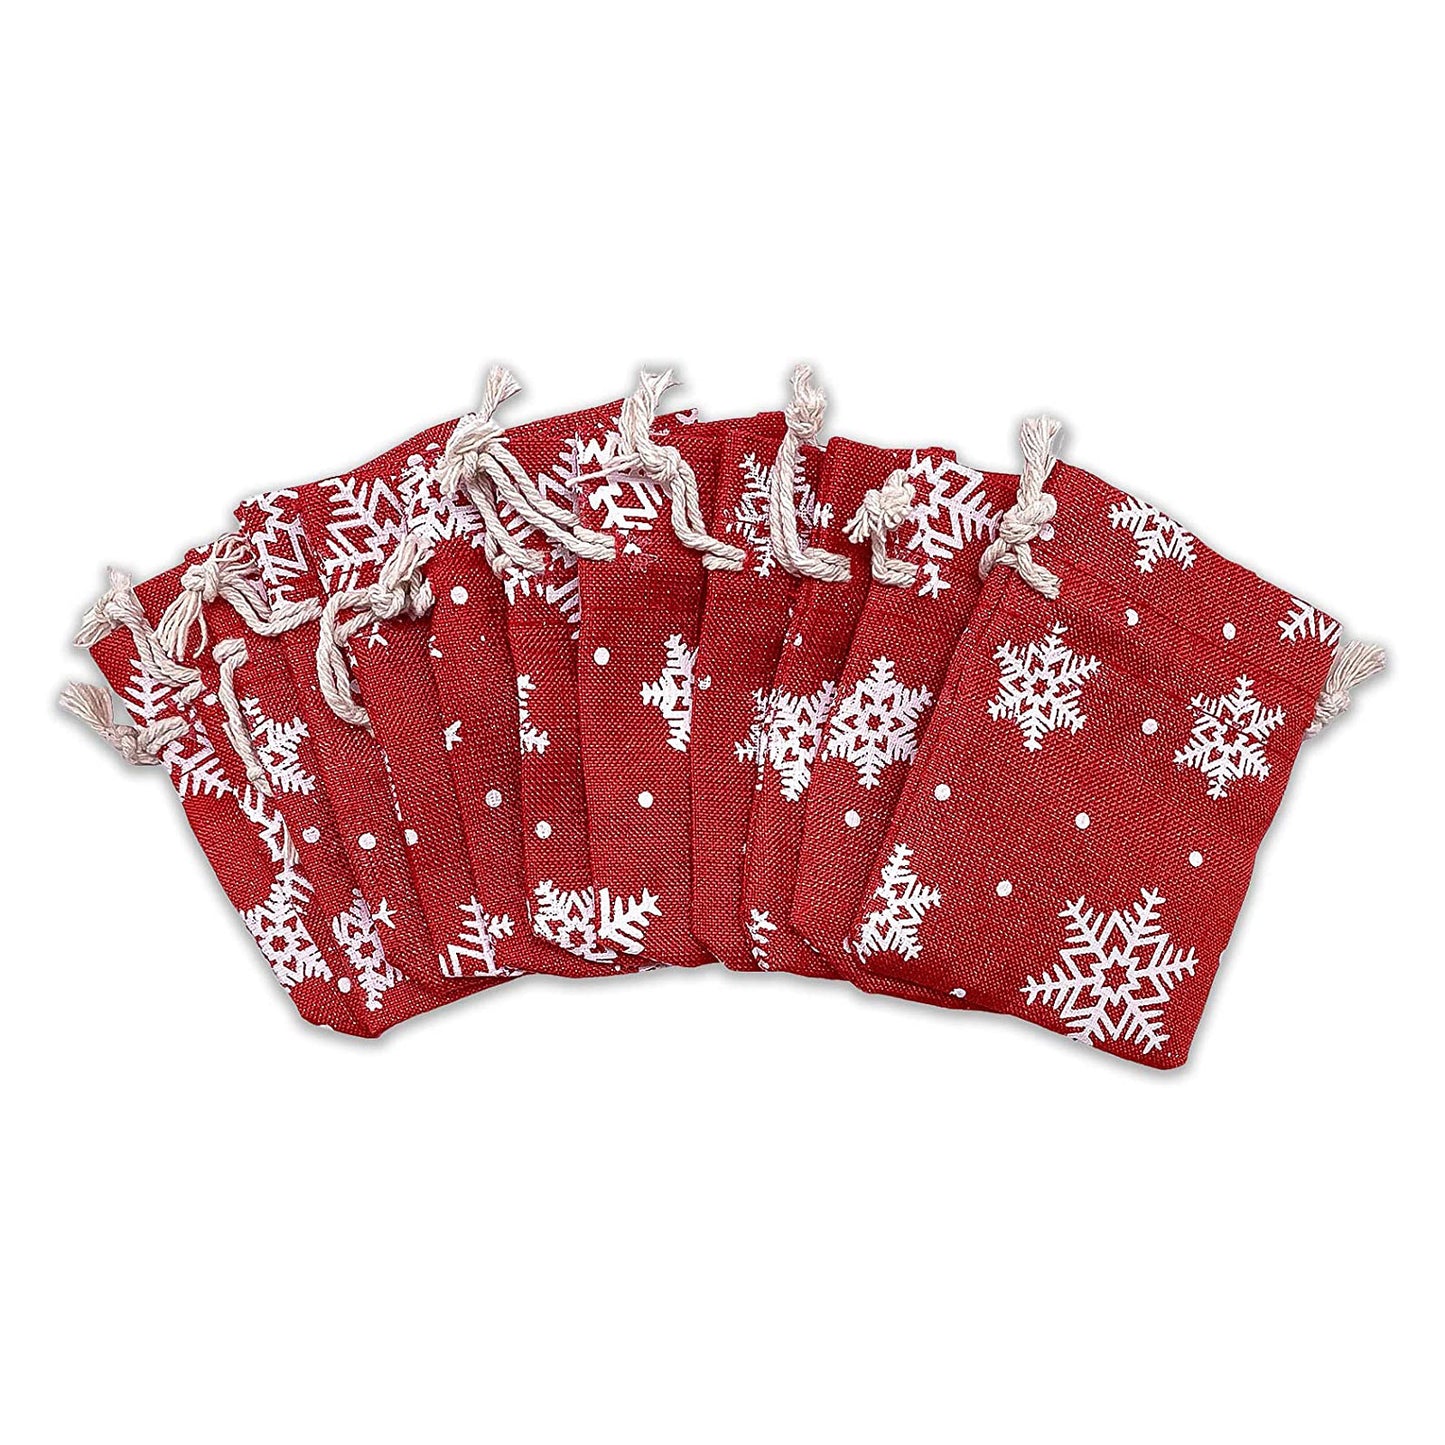 3" x 4" Jute Burlap Red Christmas White Snowflake Drawstring Gift Bags